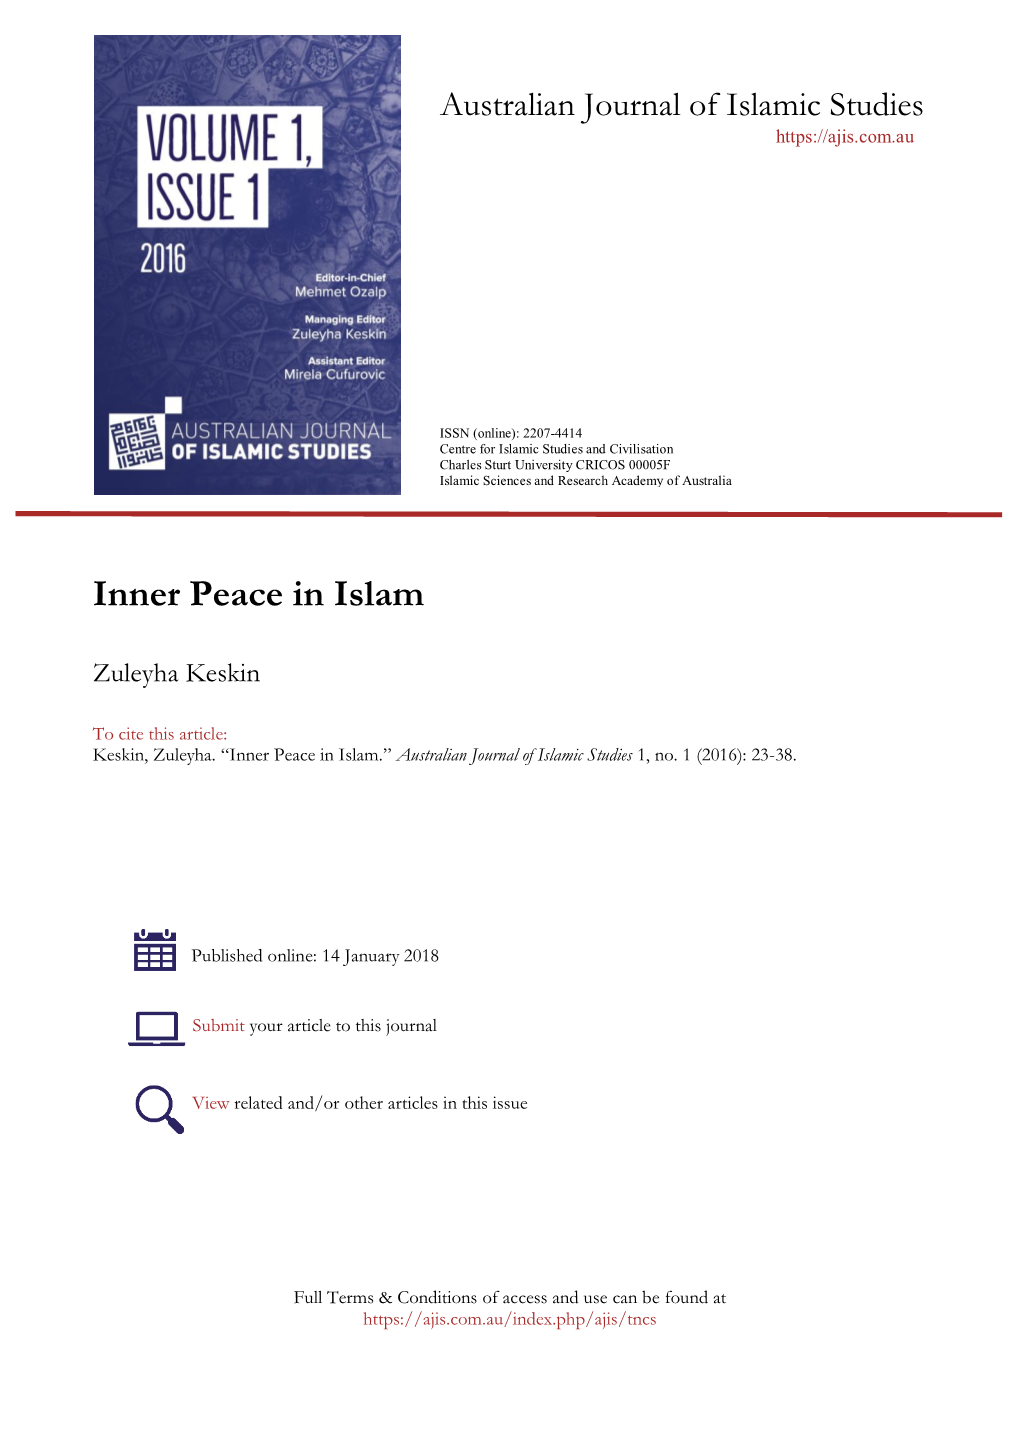 Inner Peace in Islam